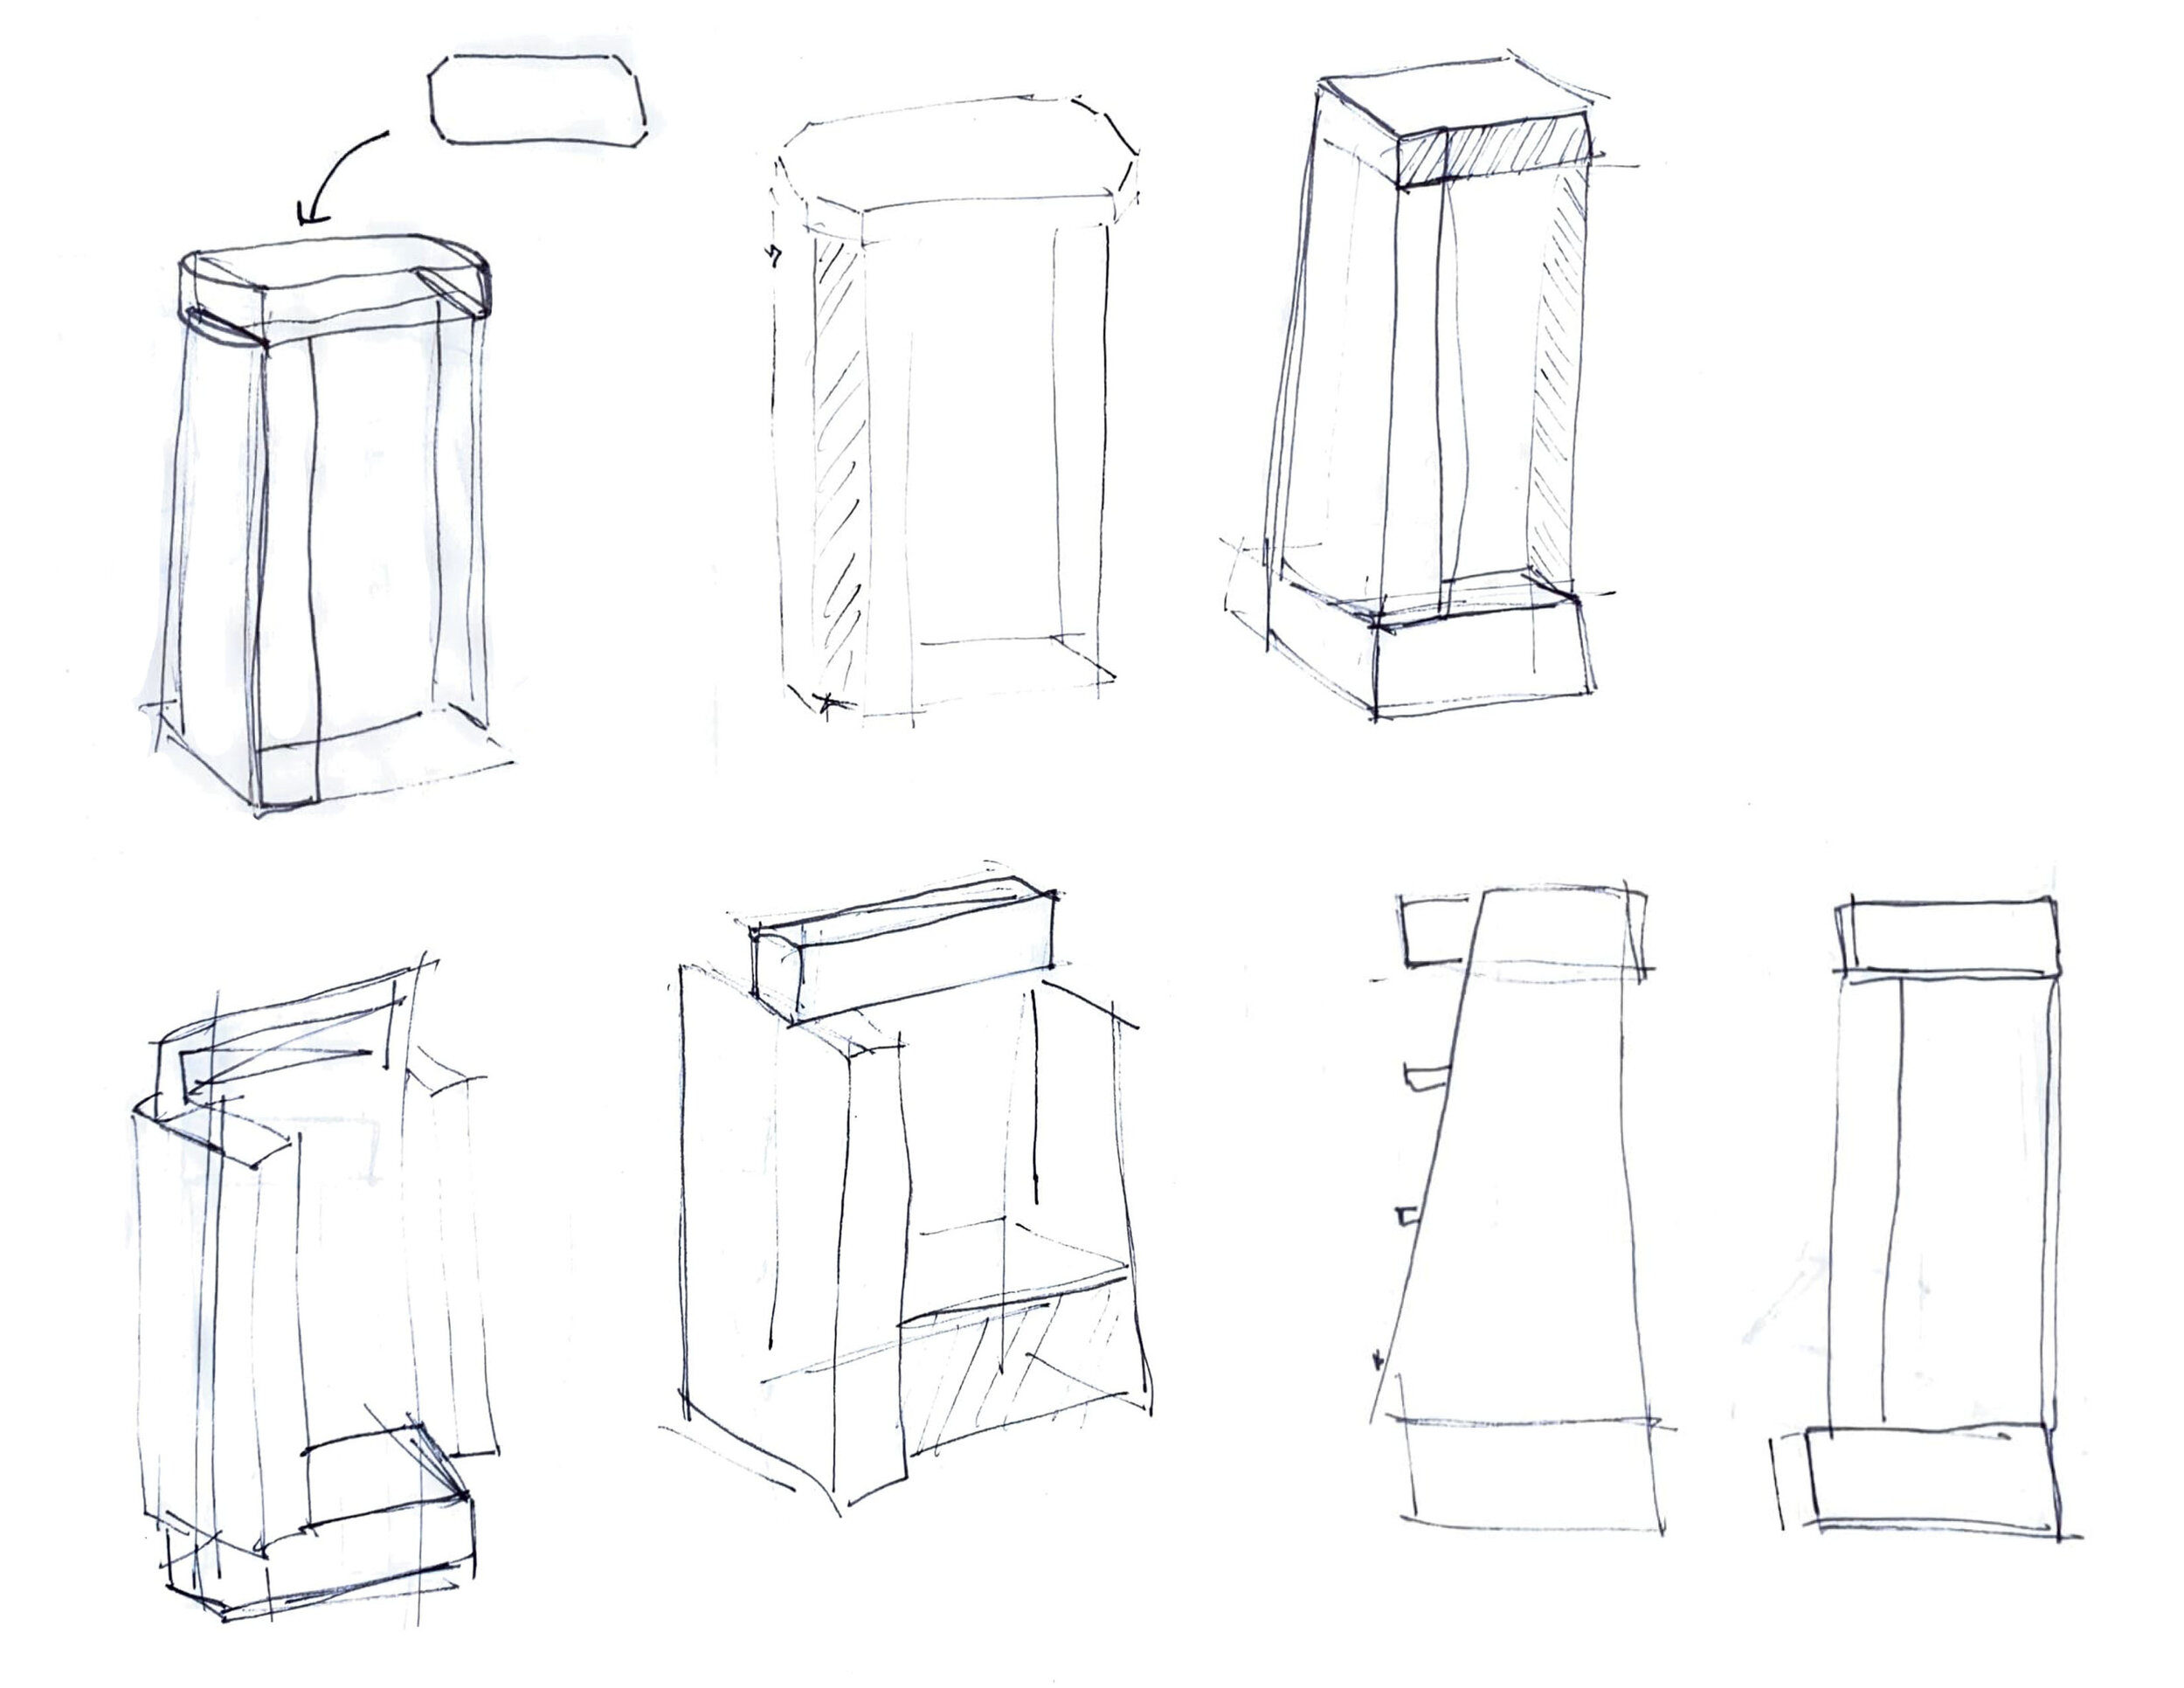 Floorstand Sketches